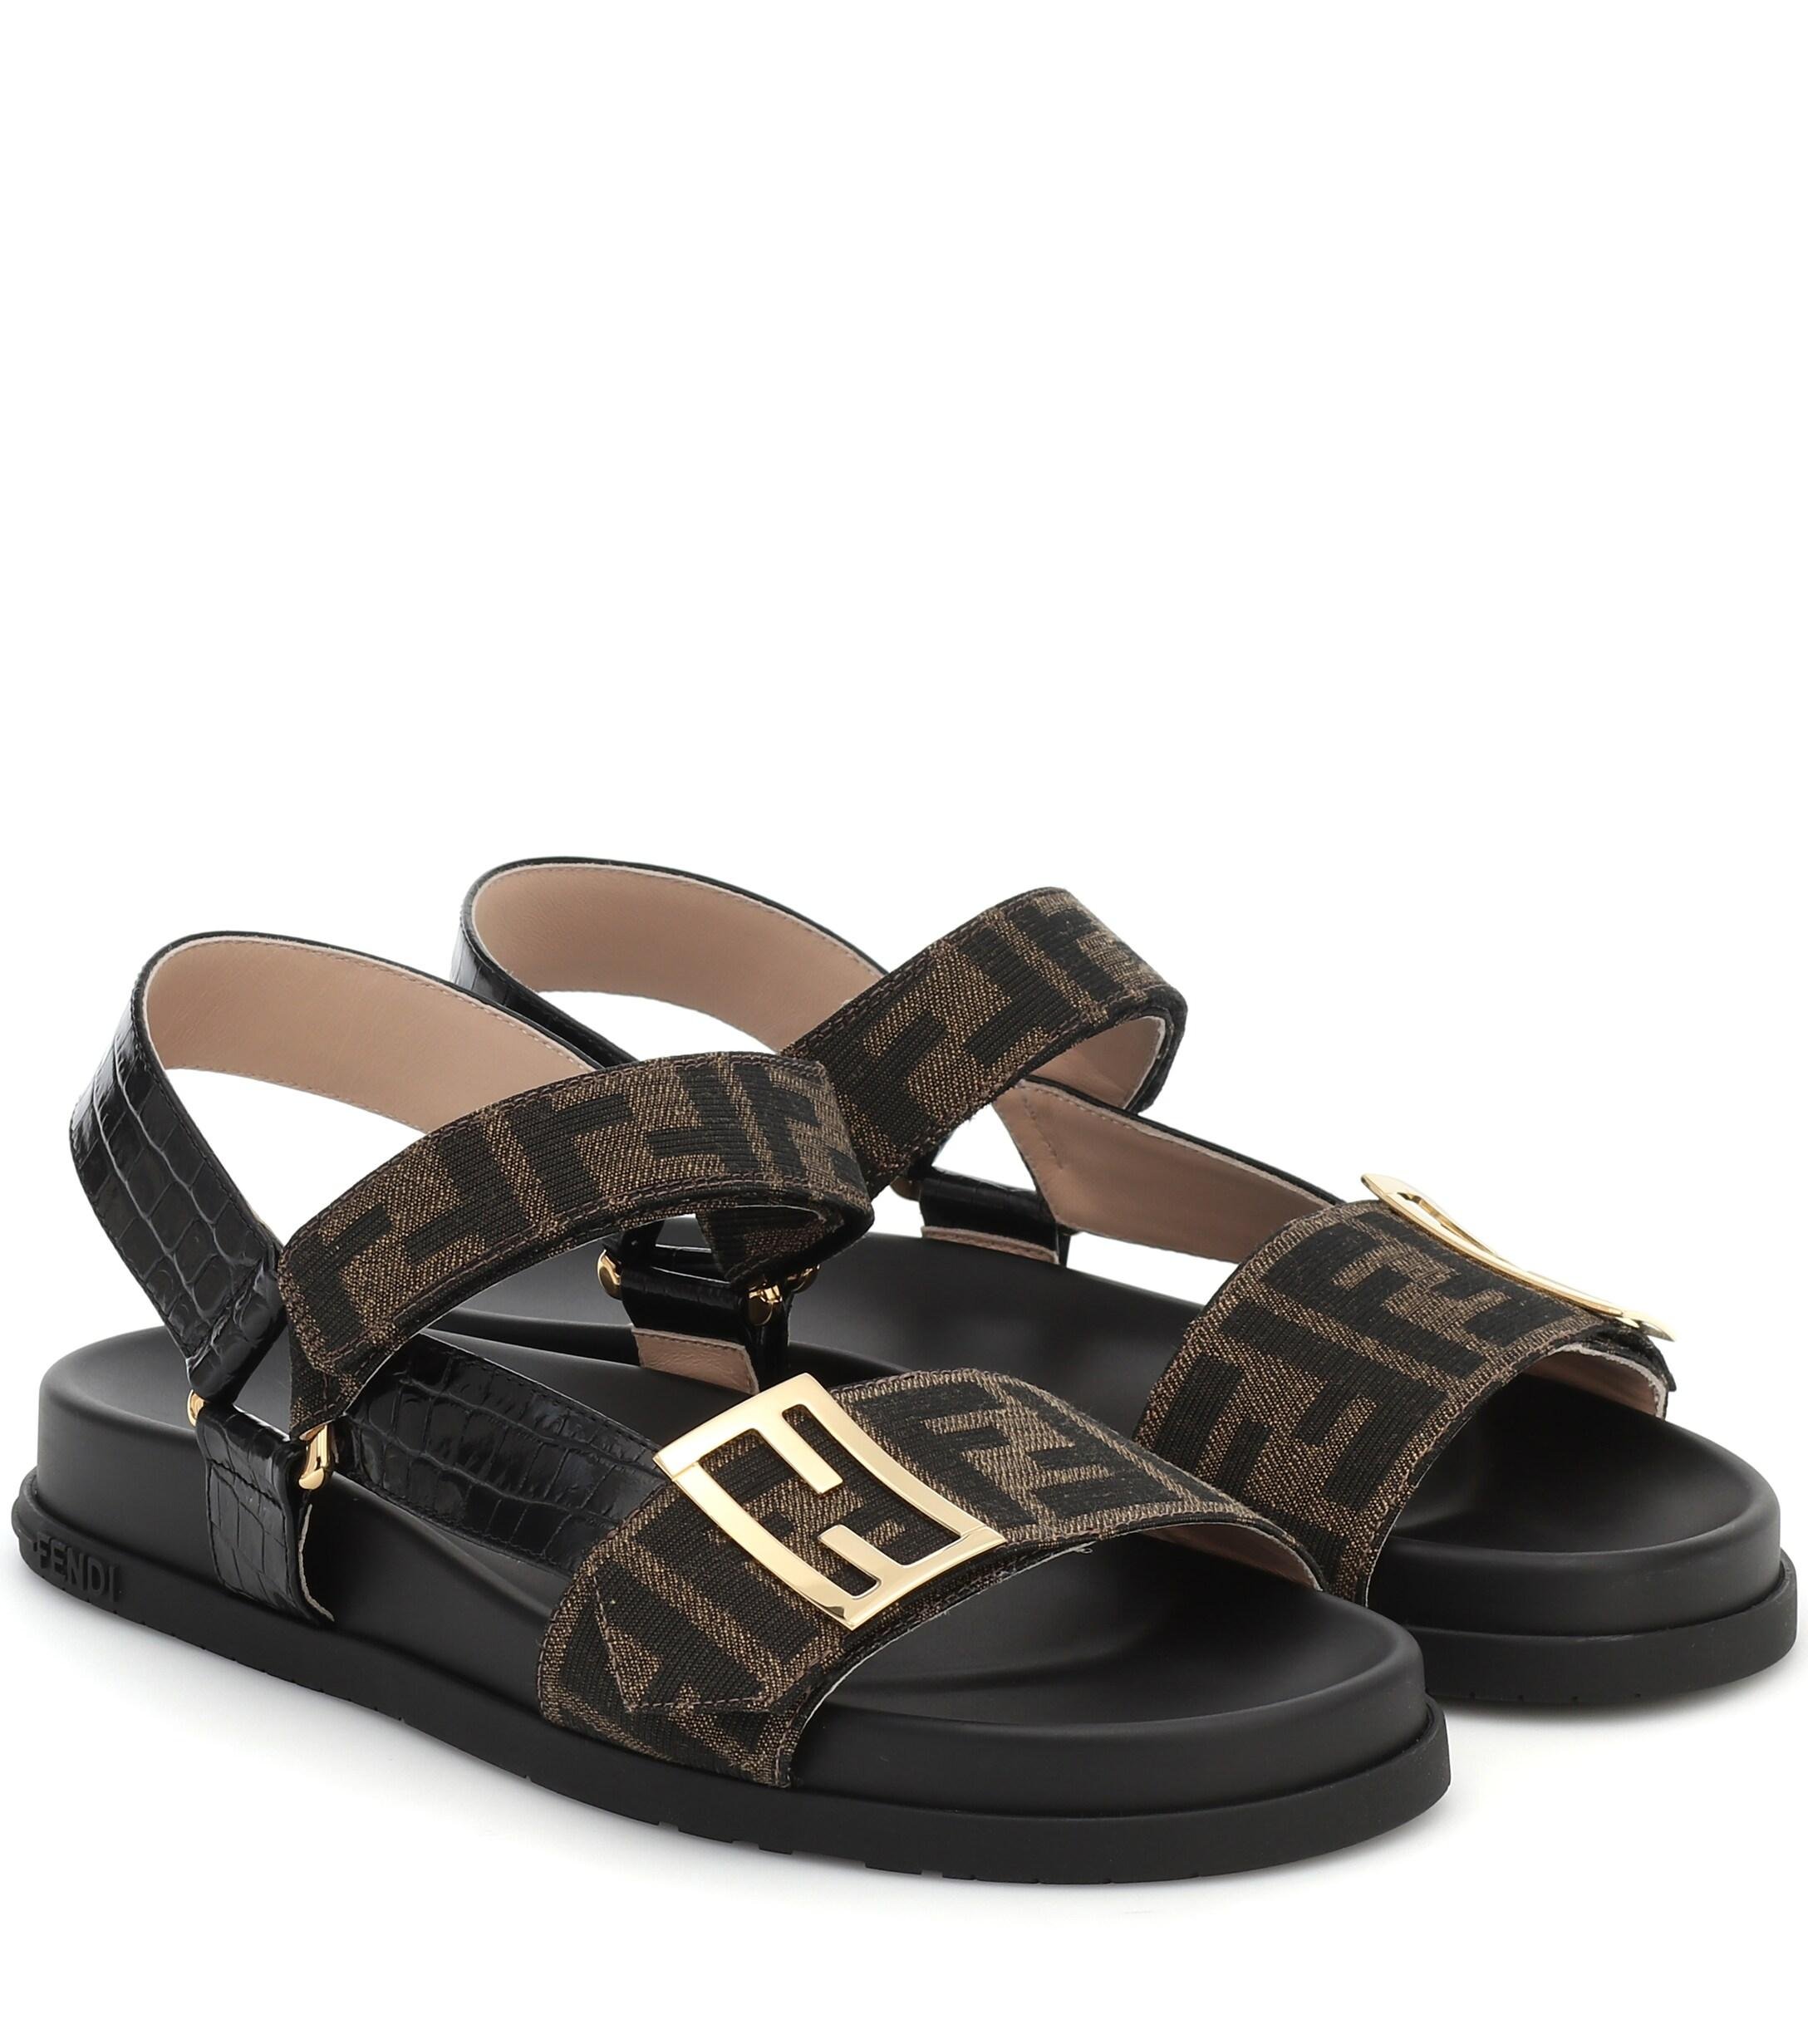 Fendi Ff Jacquard Sandals in Brown - Lyst